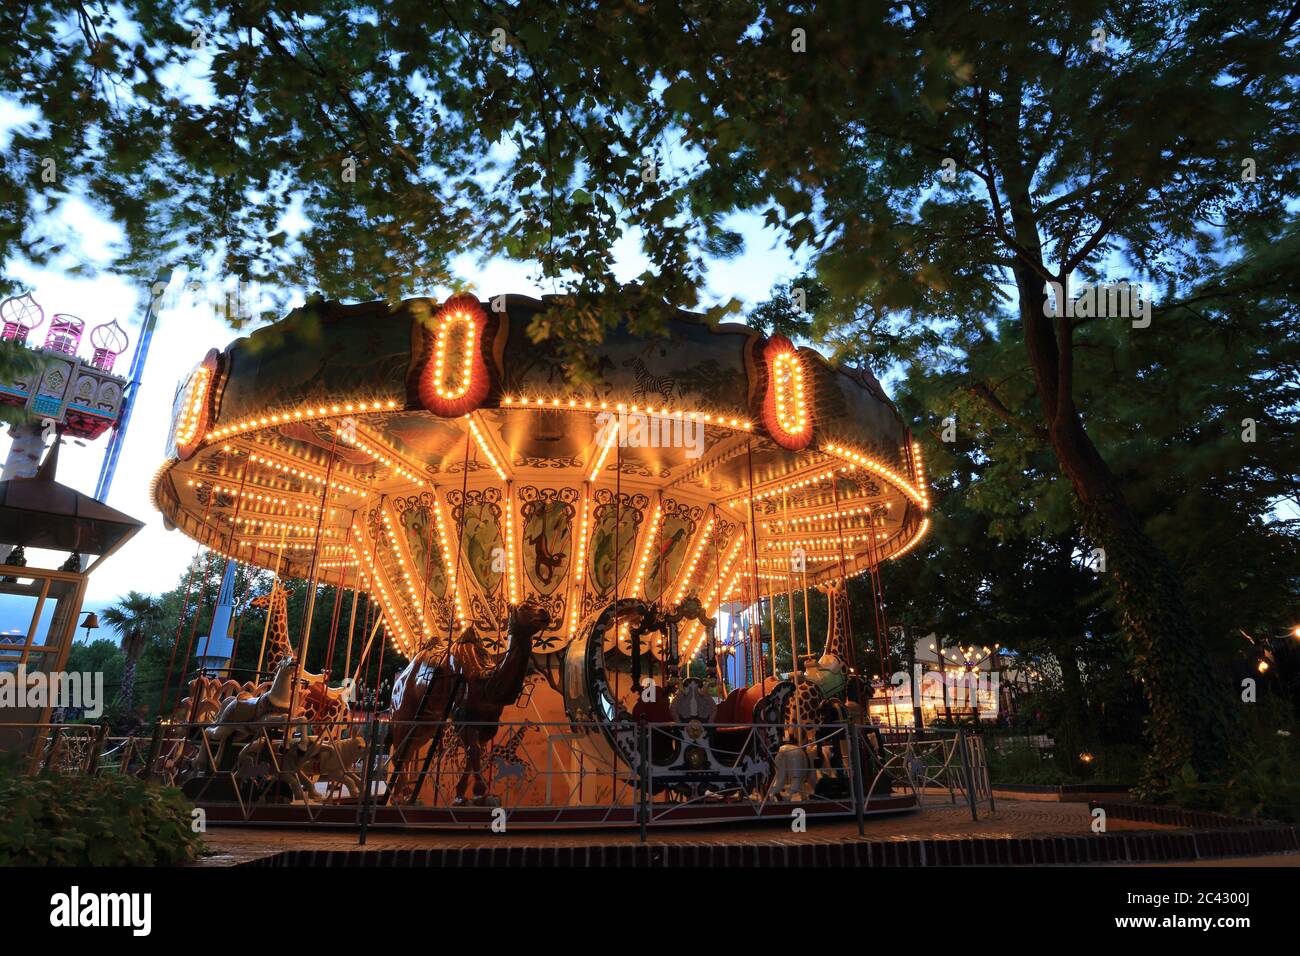 Copenhagen, Denmark - June 29, 2014: Classic Carousel in Tivoli amusement park. Almost 4 million people visit Tivoli Gardens each year. Stock Photo